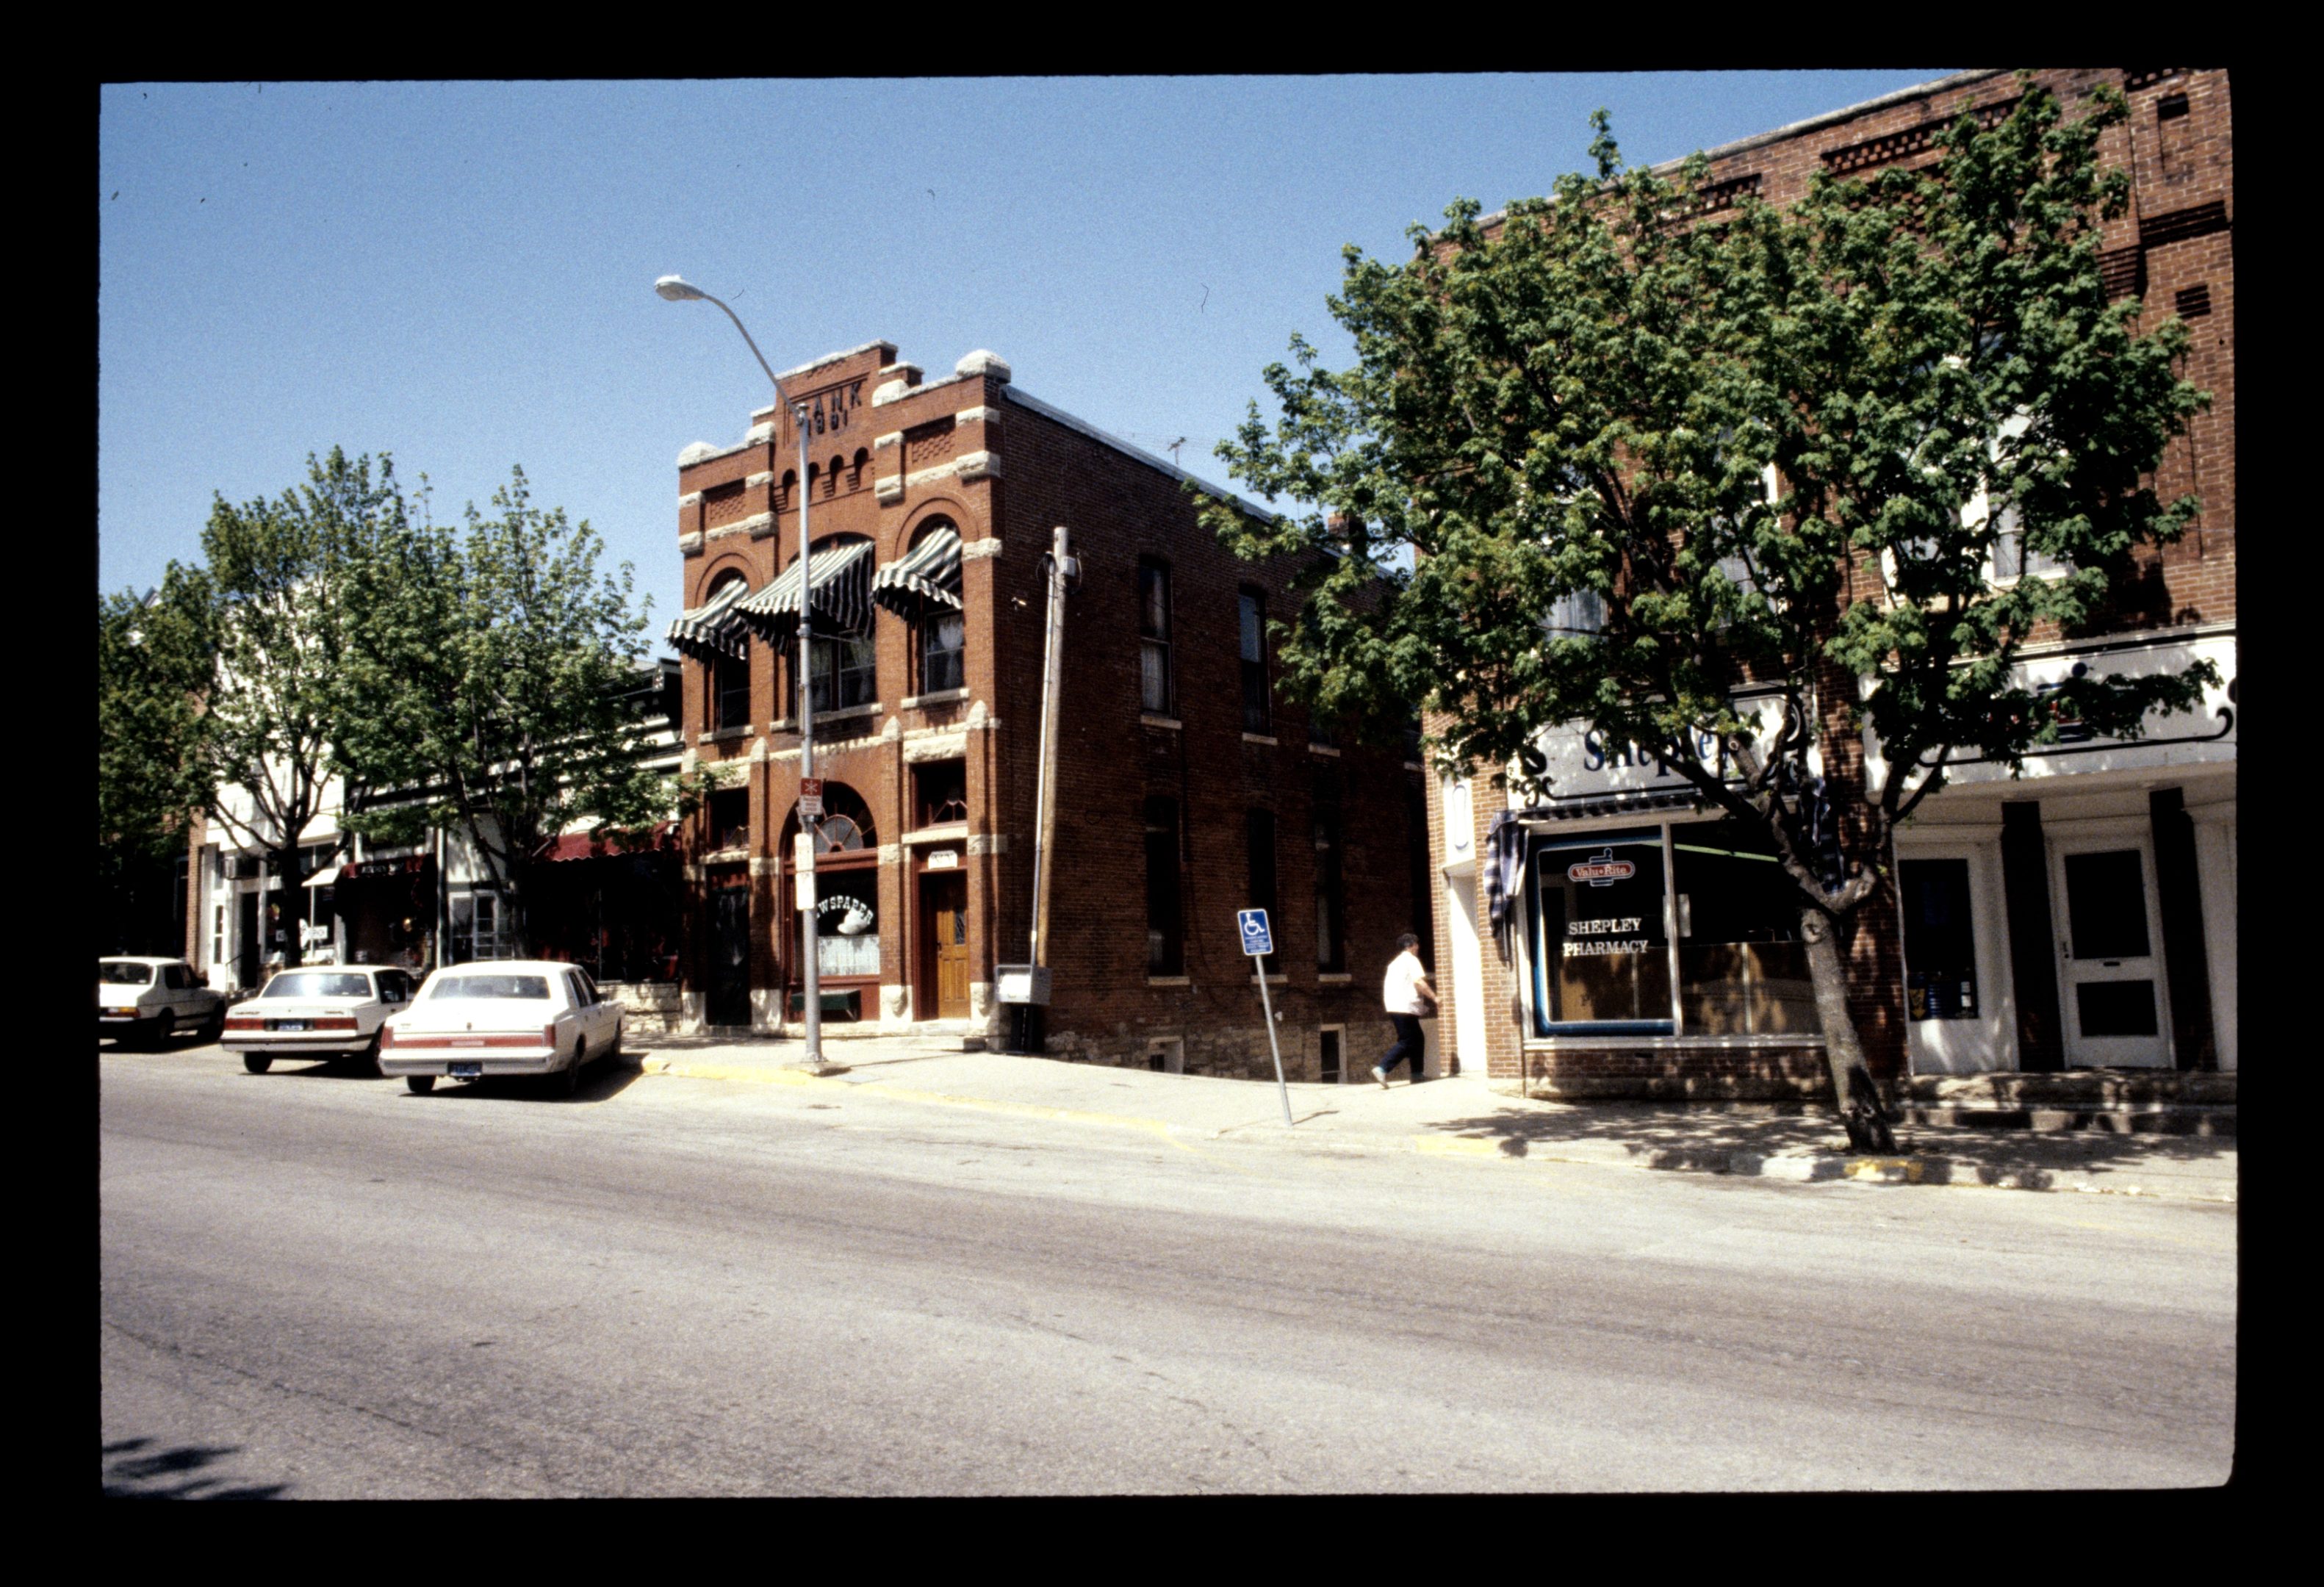 photo of Main Street